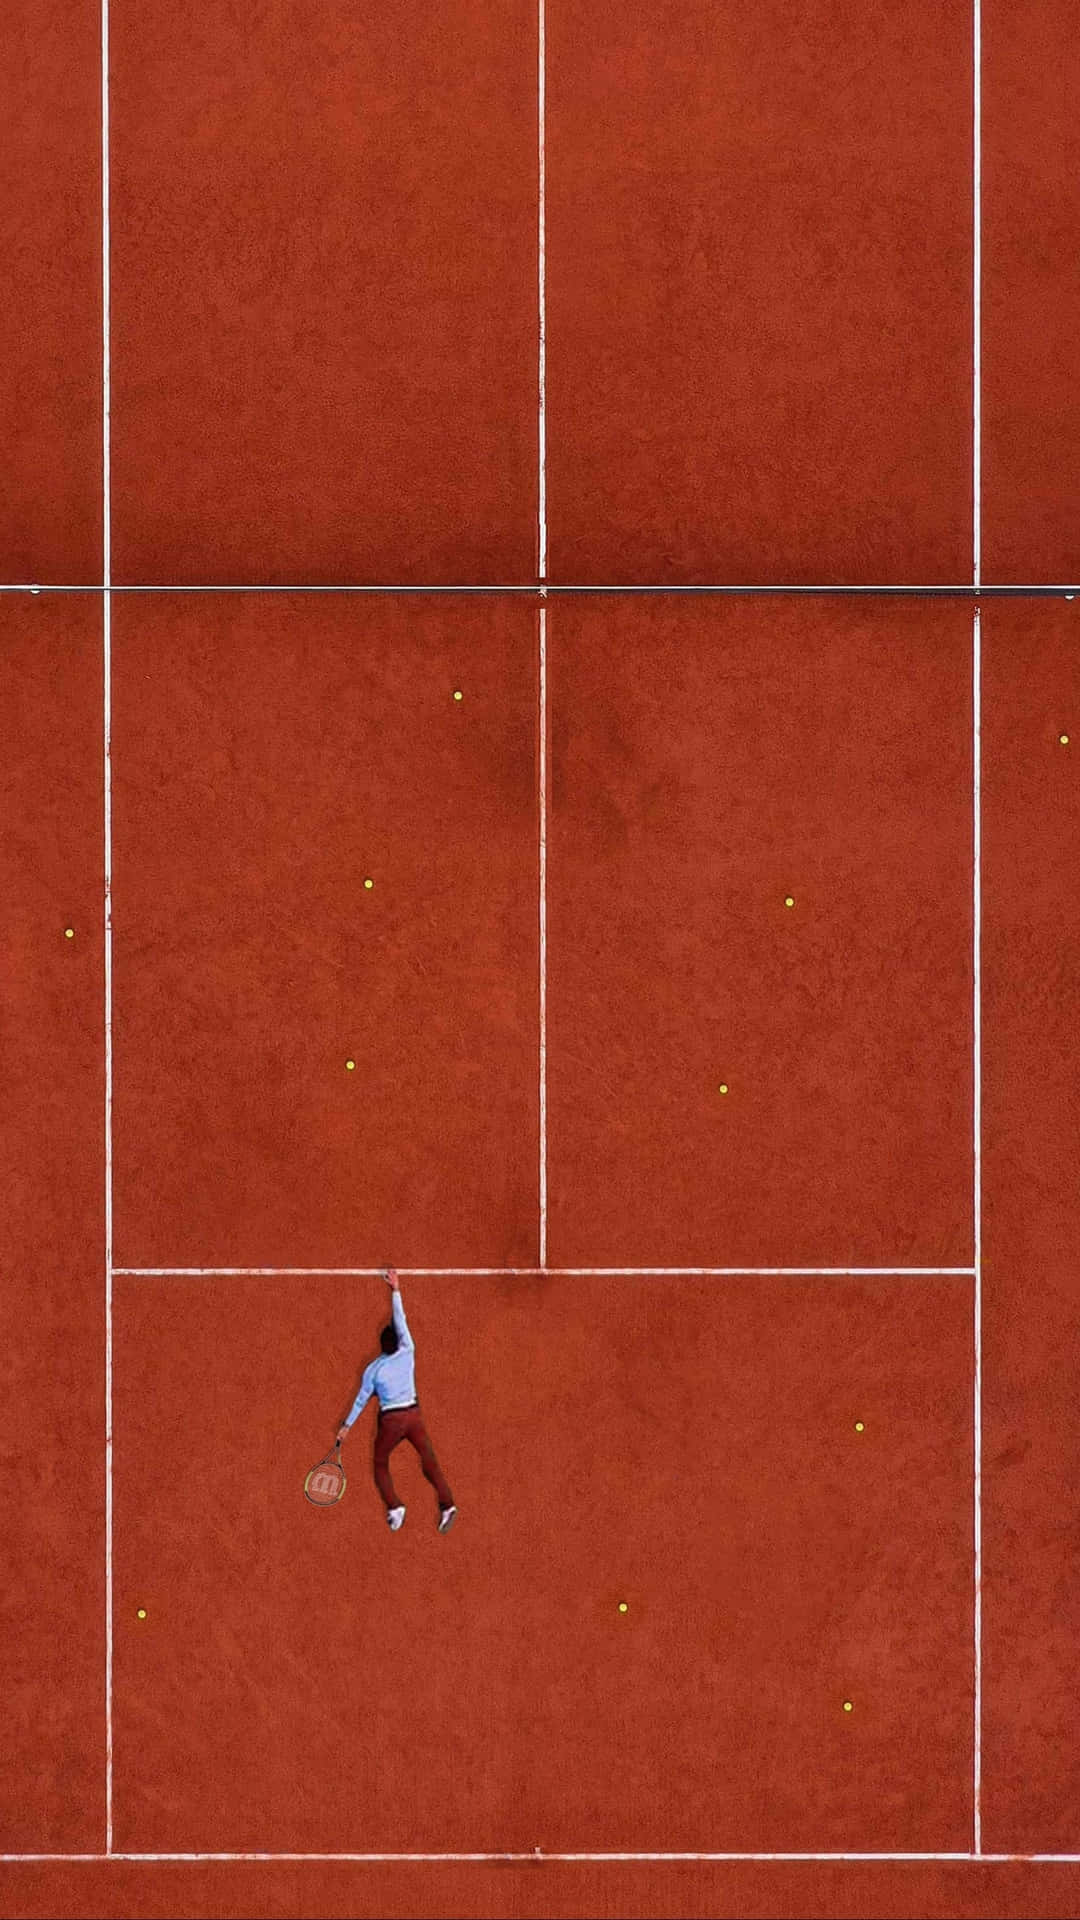 Clay Court Tennis Player Aerial View.jpg Wallpaper